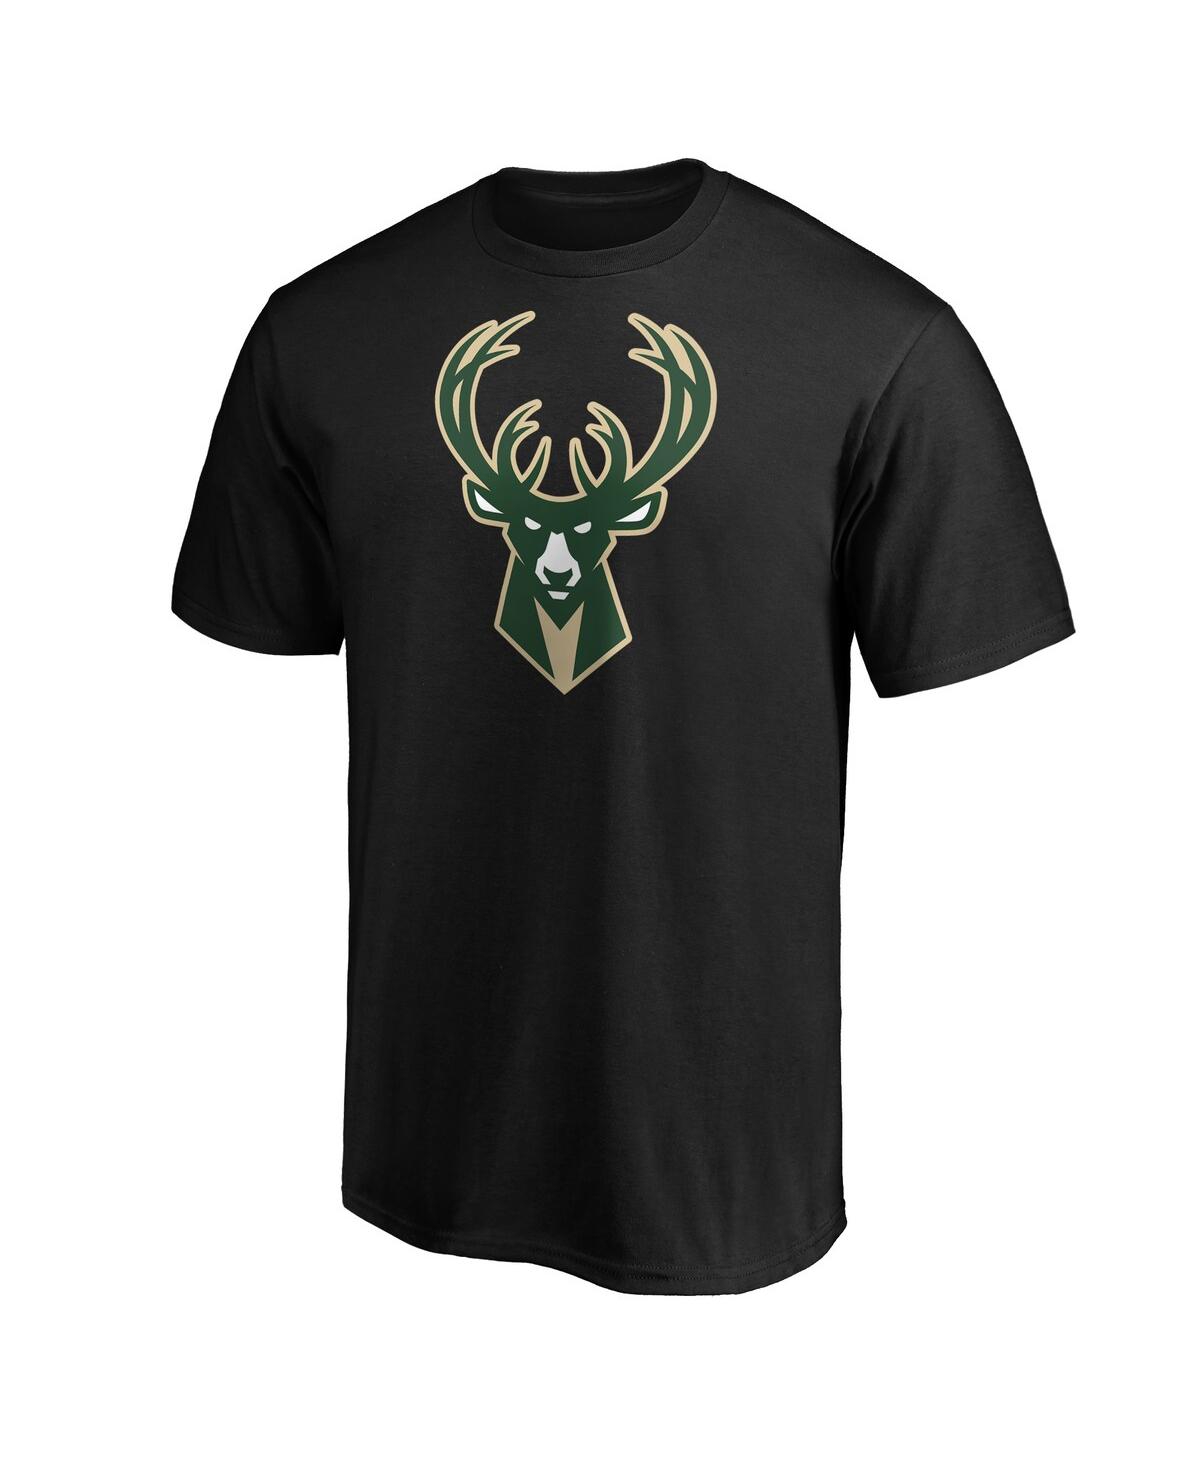 Shop Fanatics Men's  Giannis Antetokounmpo Black Milwaukee Bucks Team Playmaker Name And Number T-shirt